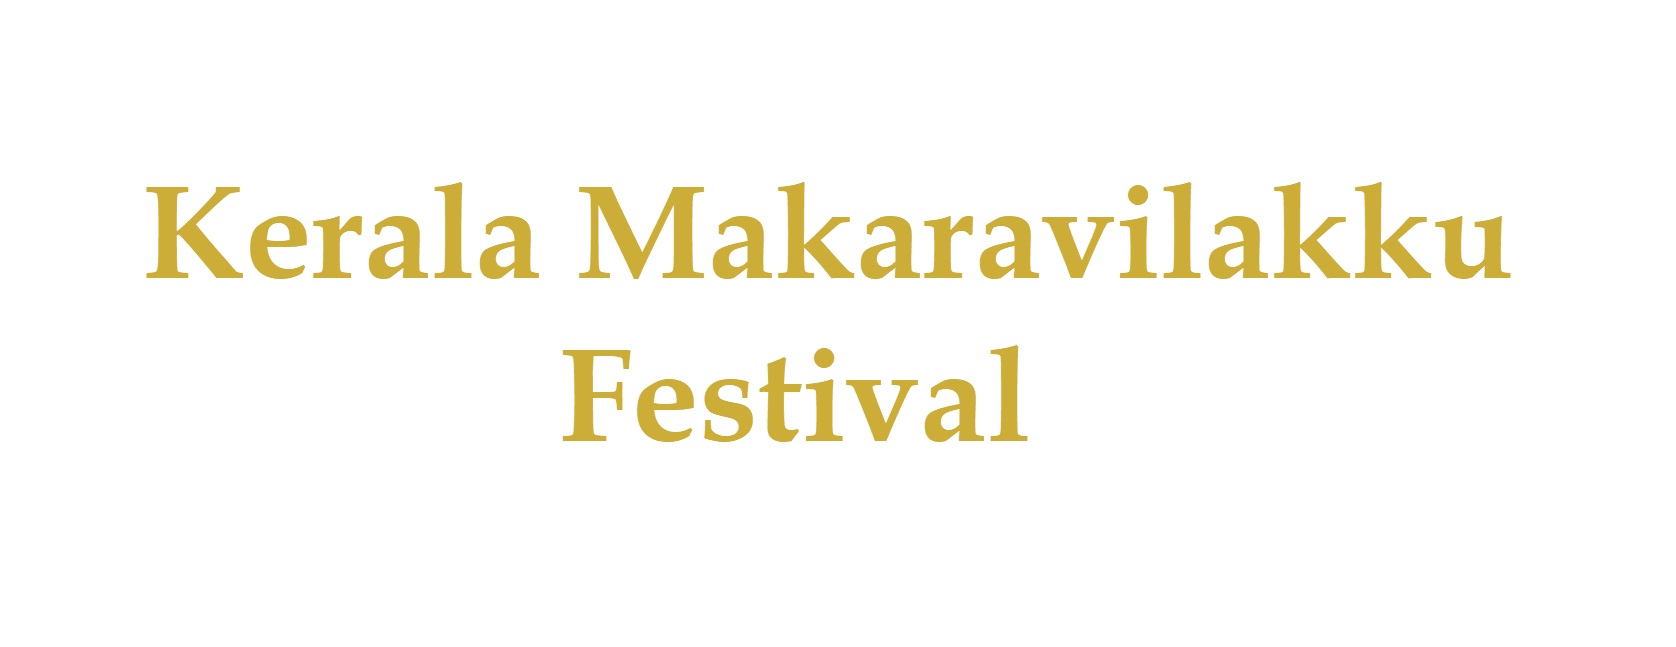 Makaravilakku Festival Tour, Kerala